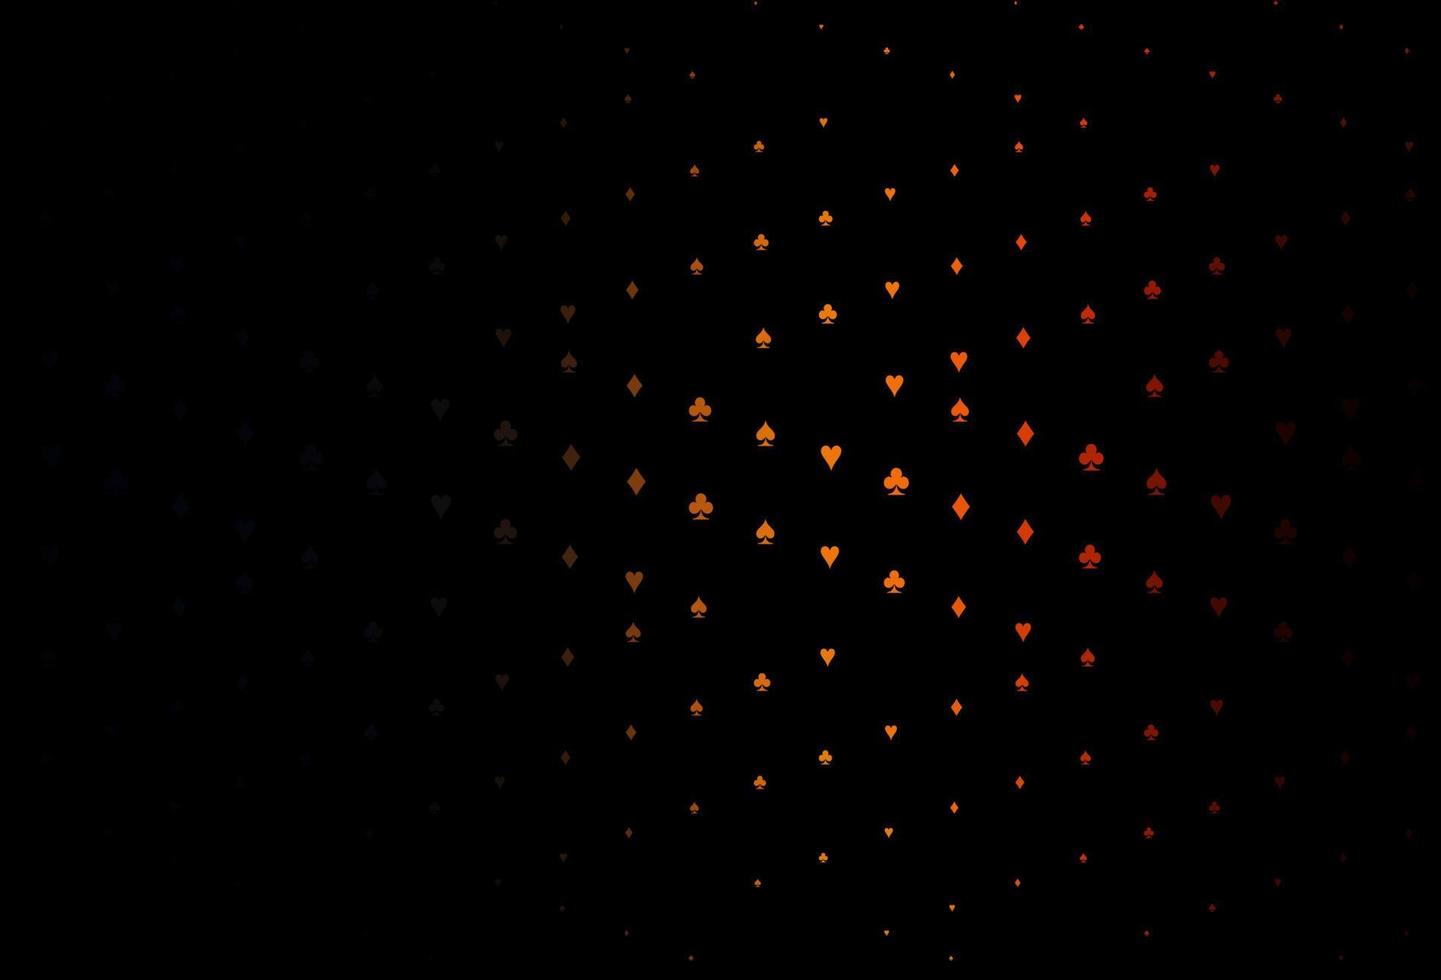 textura vector laranja escuro com cartas de jogar.